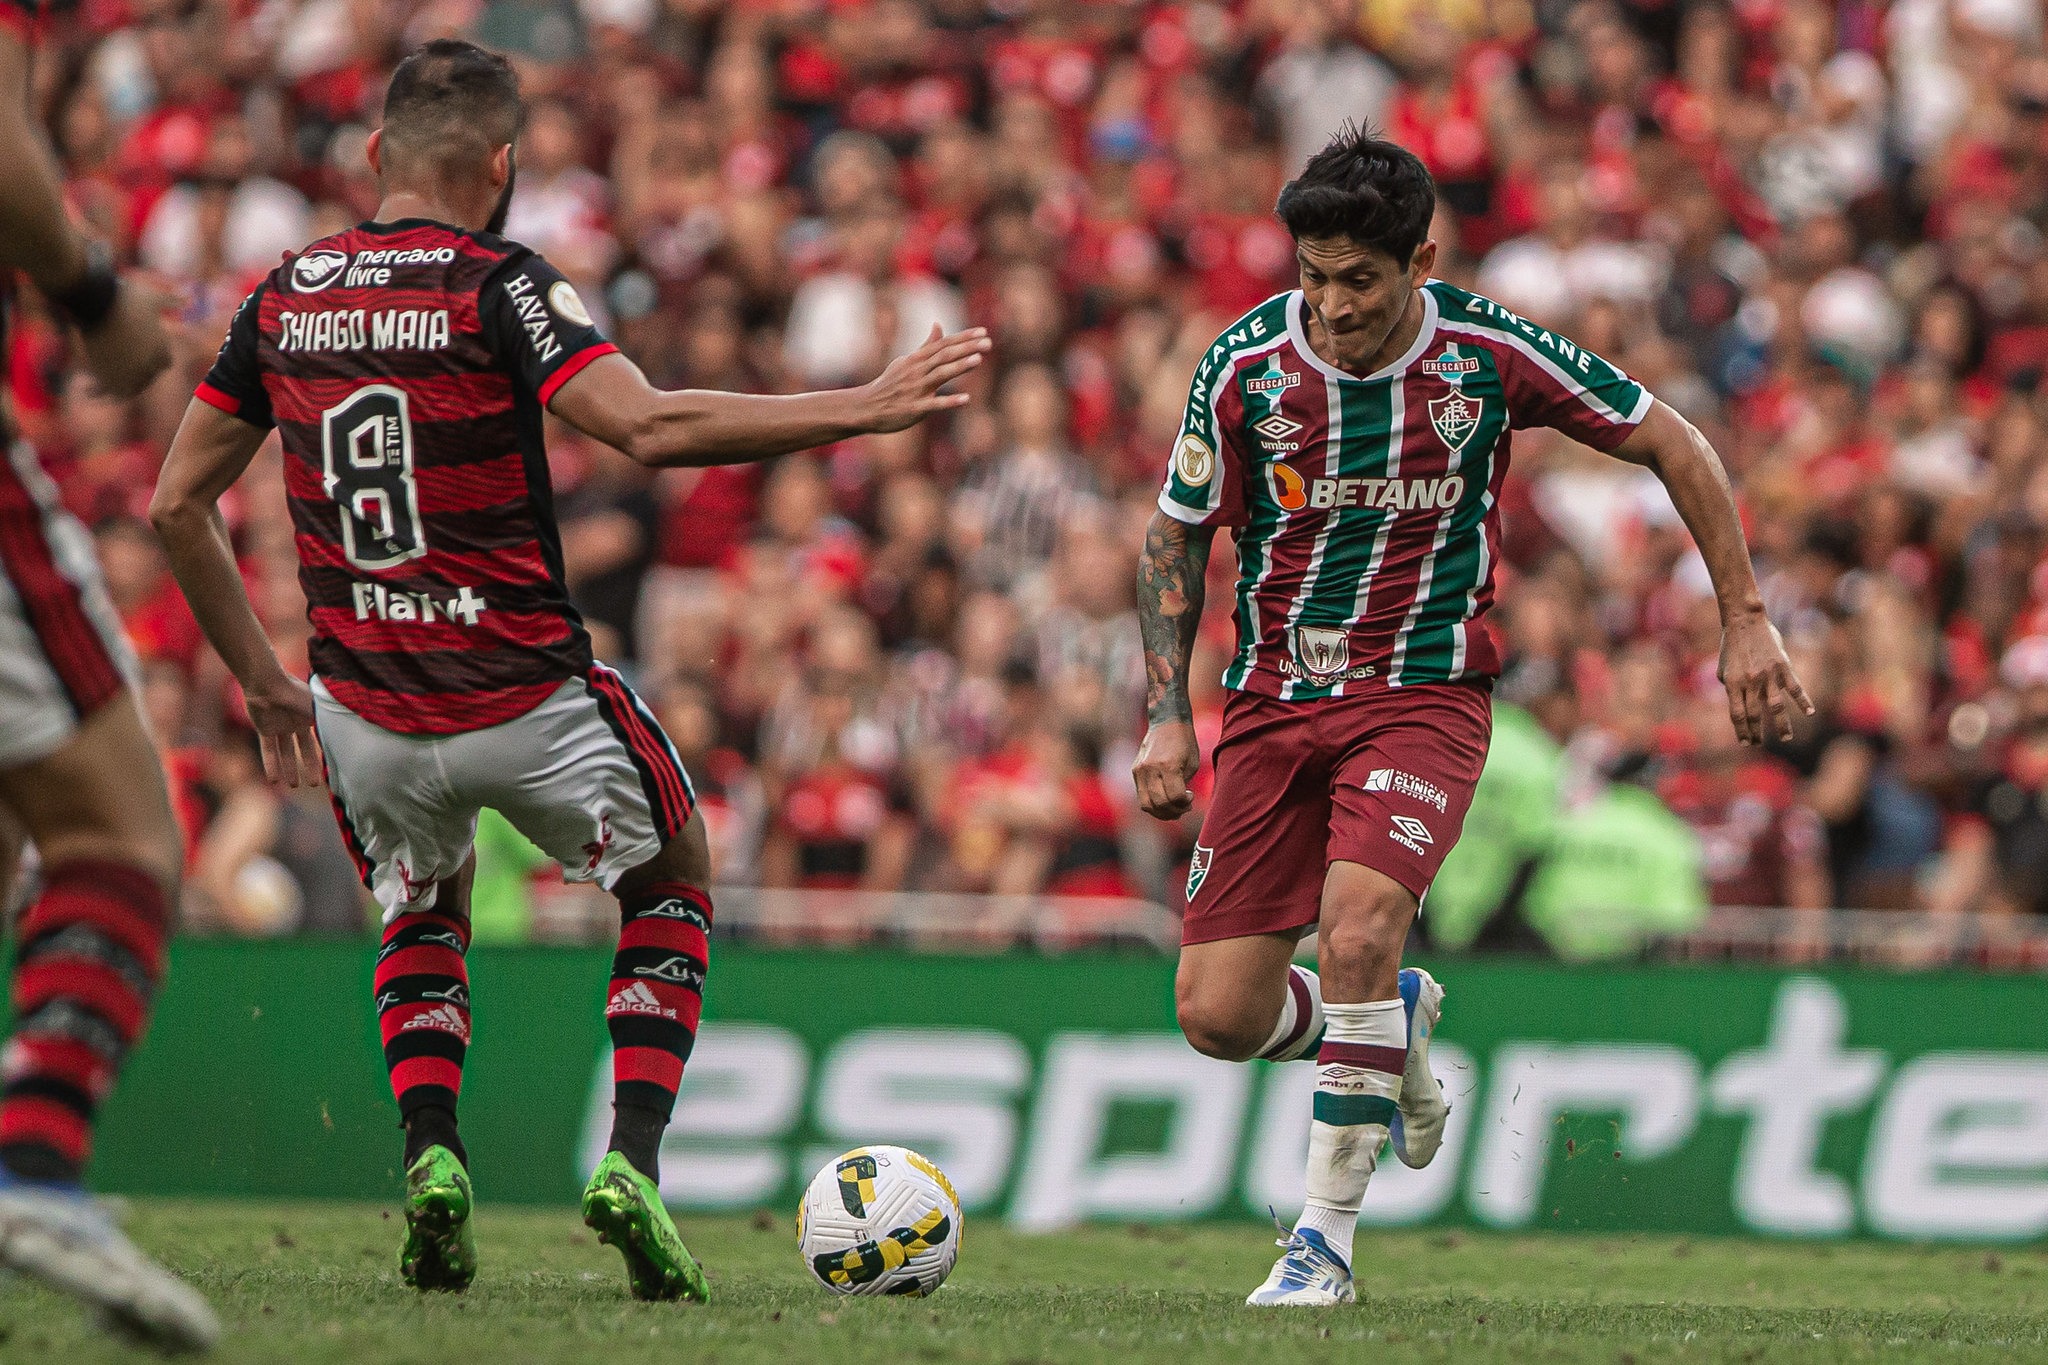 AO VIVO: Assista Flamengo x Fluminense pelo Campeonato Carioca 